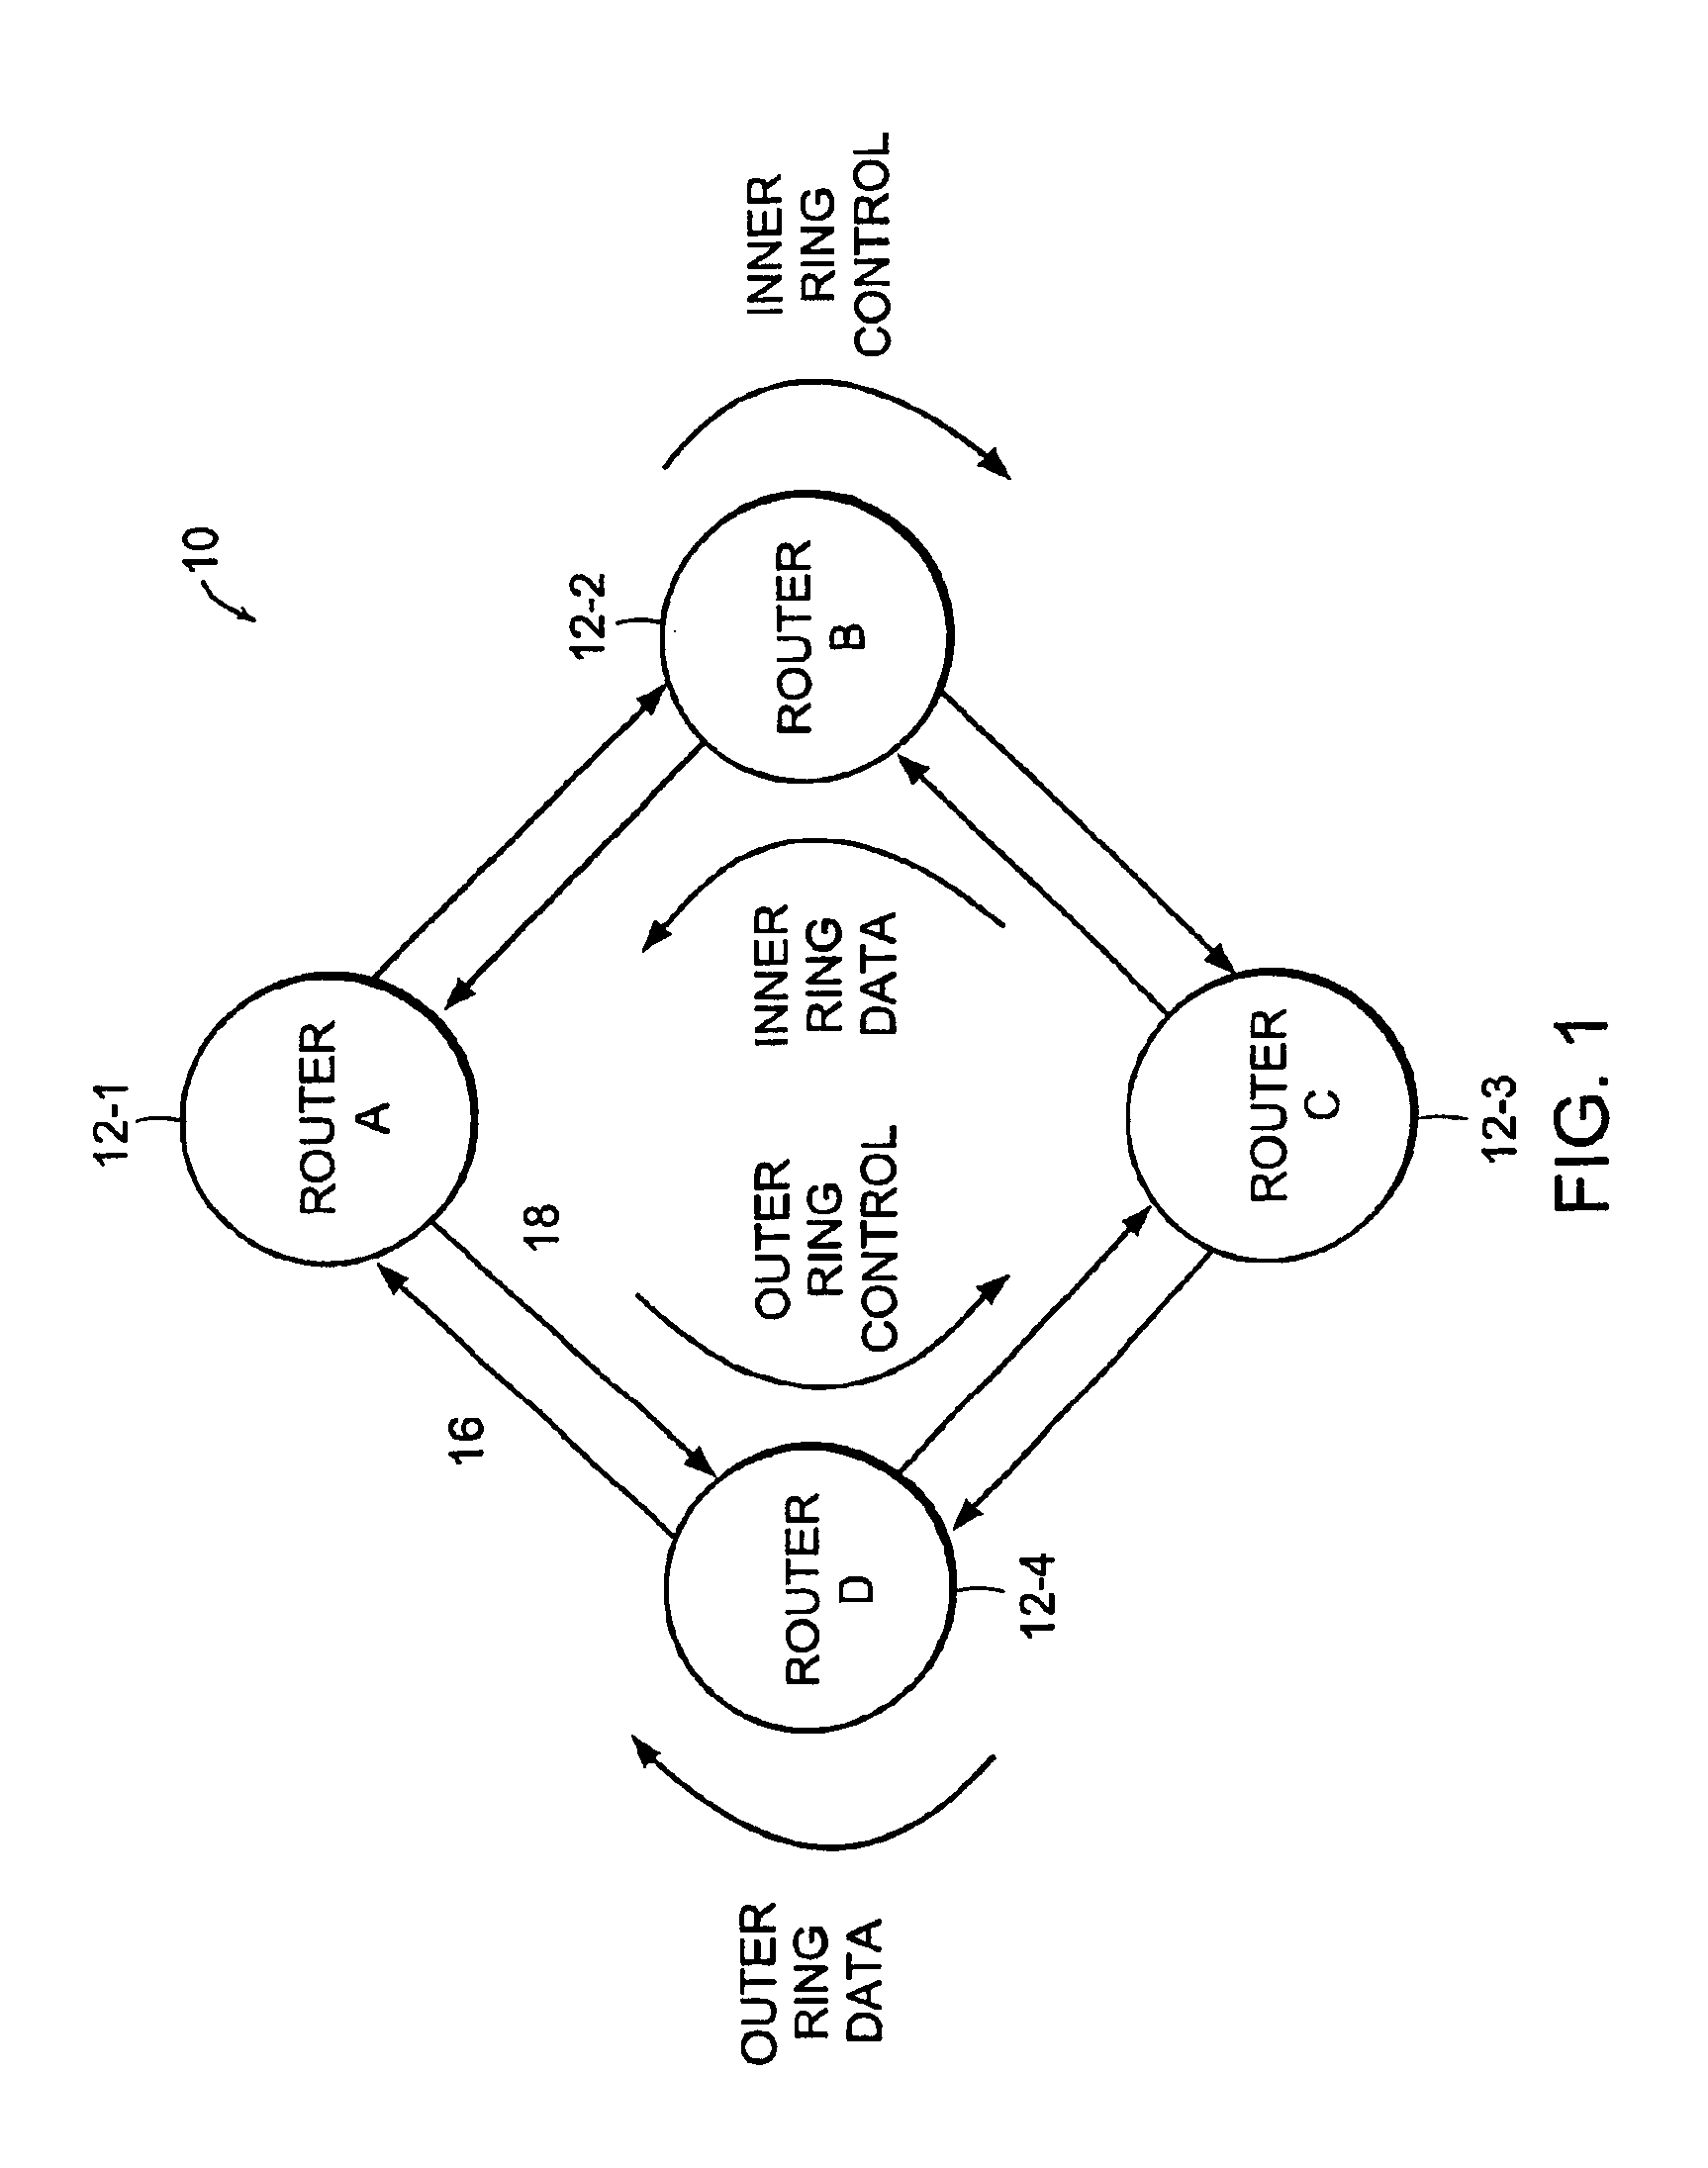 Configurable serial interconnection